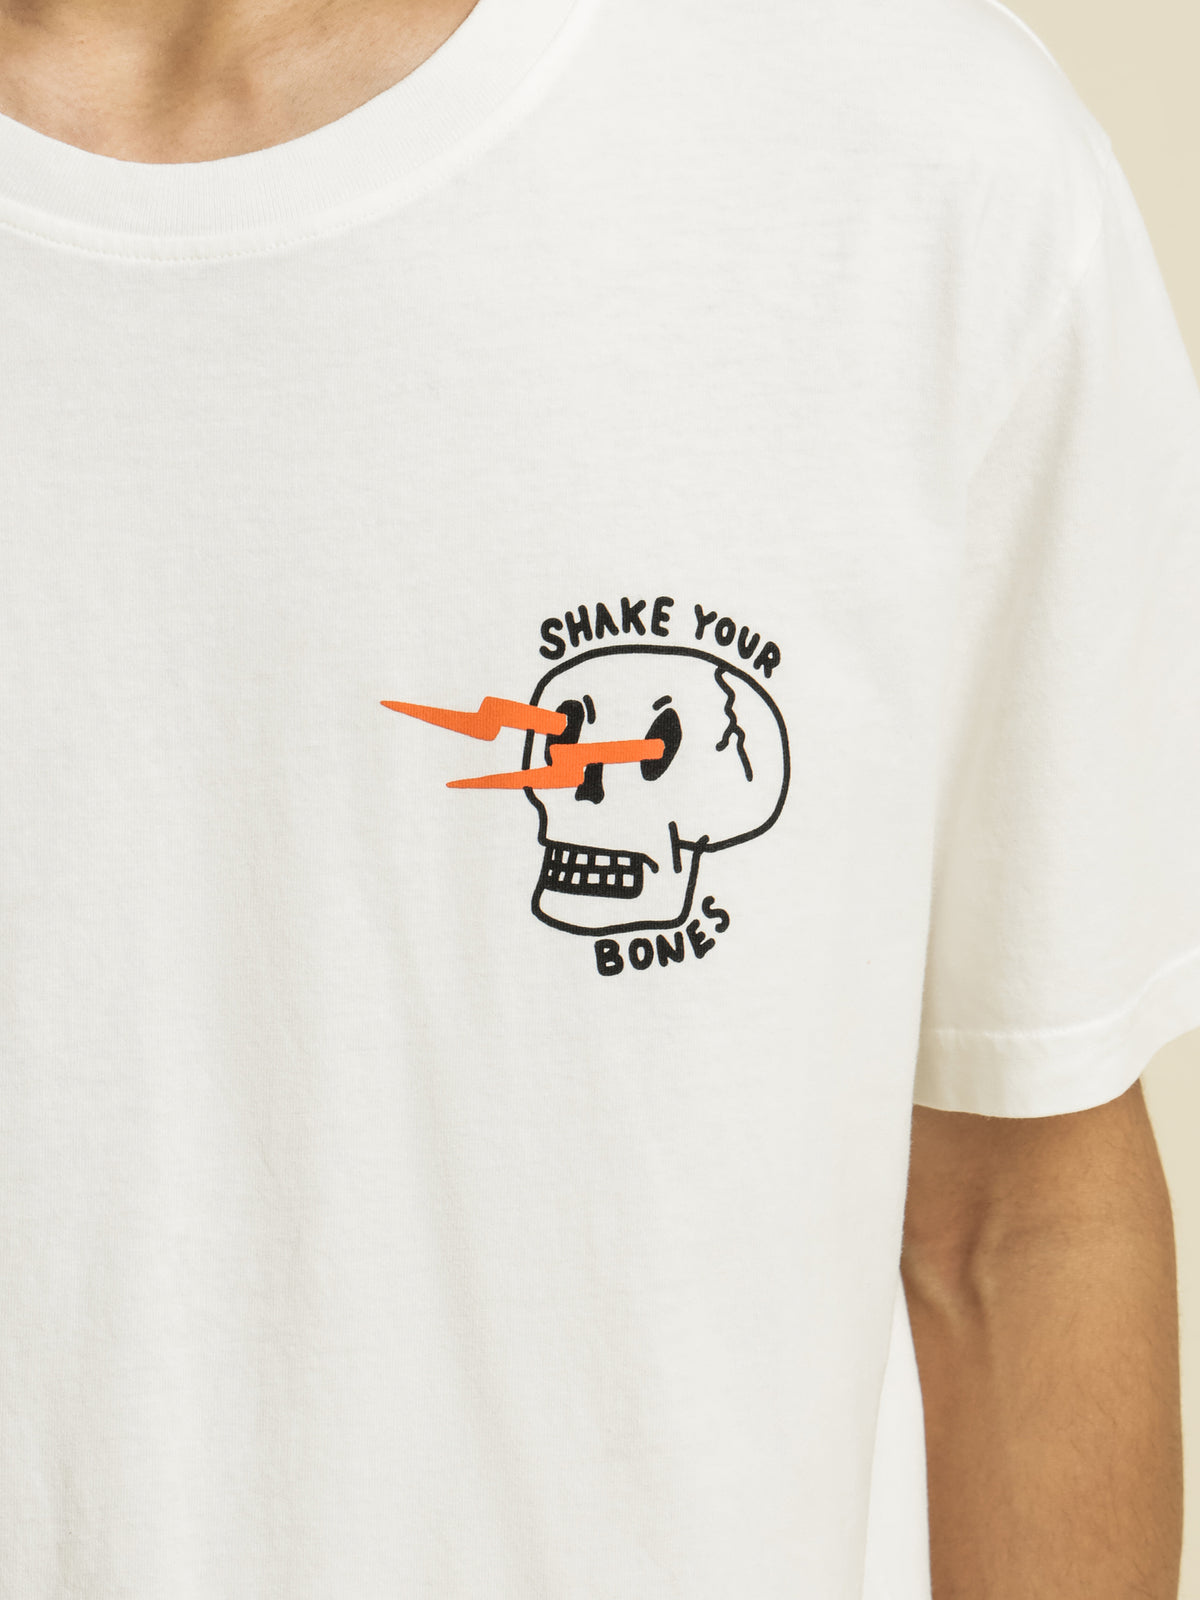 Roy Shake Your Bones T-Shirt in White